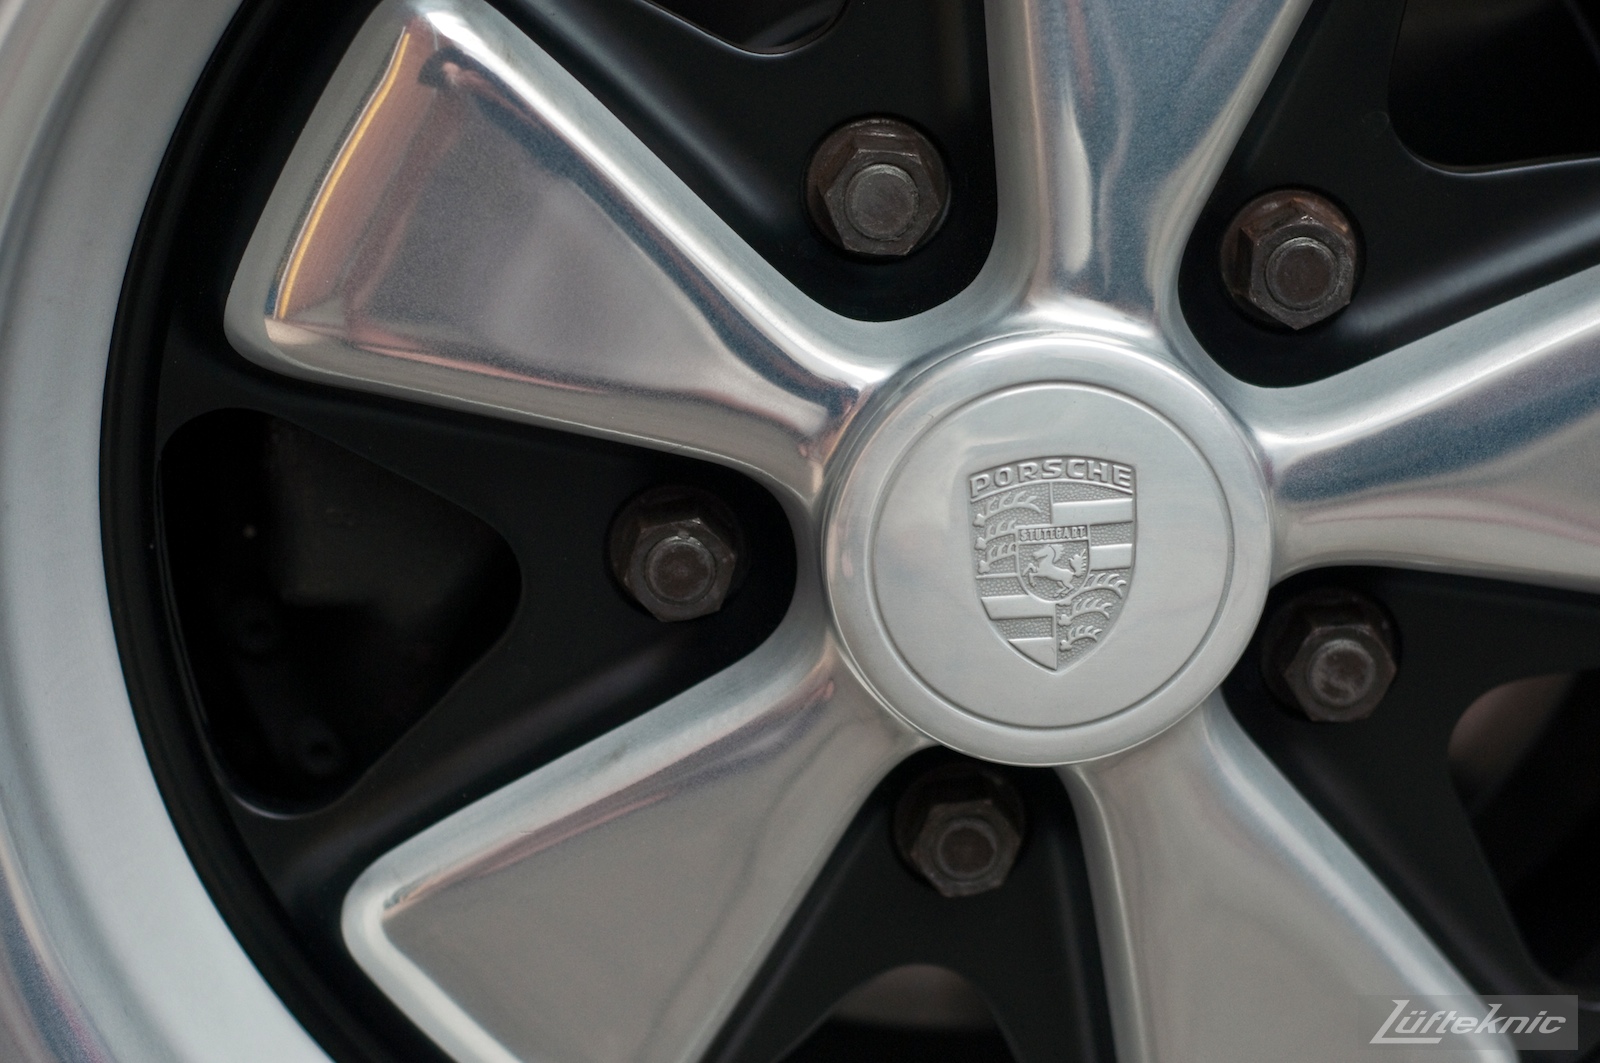 A close up picture of a Porsche center cap on a Fuchs wheel